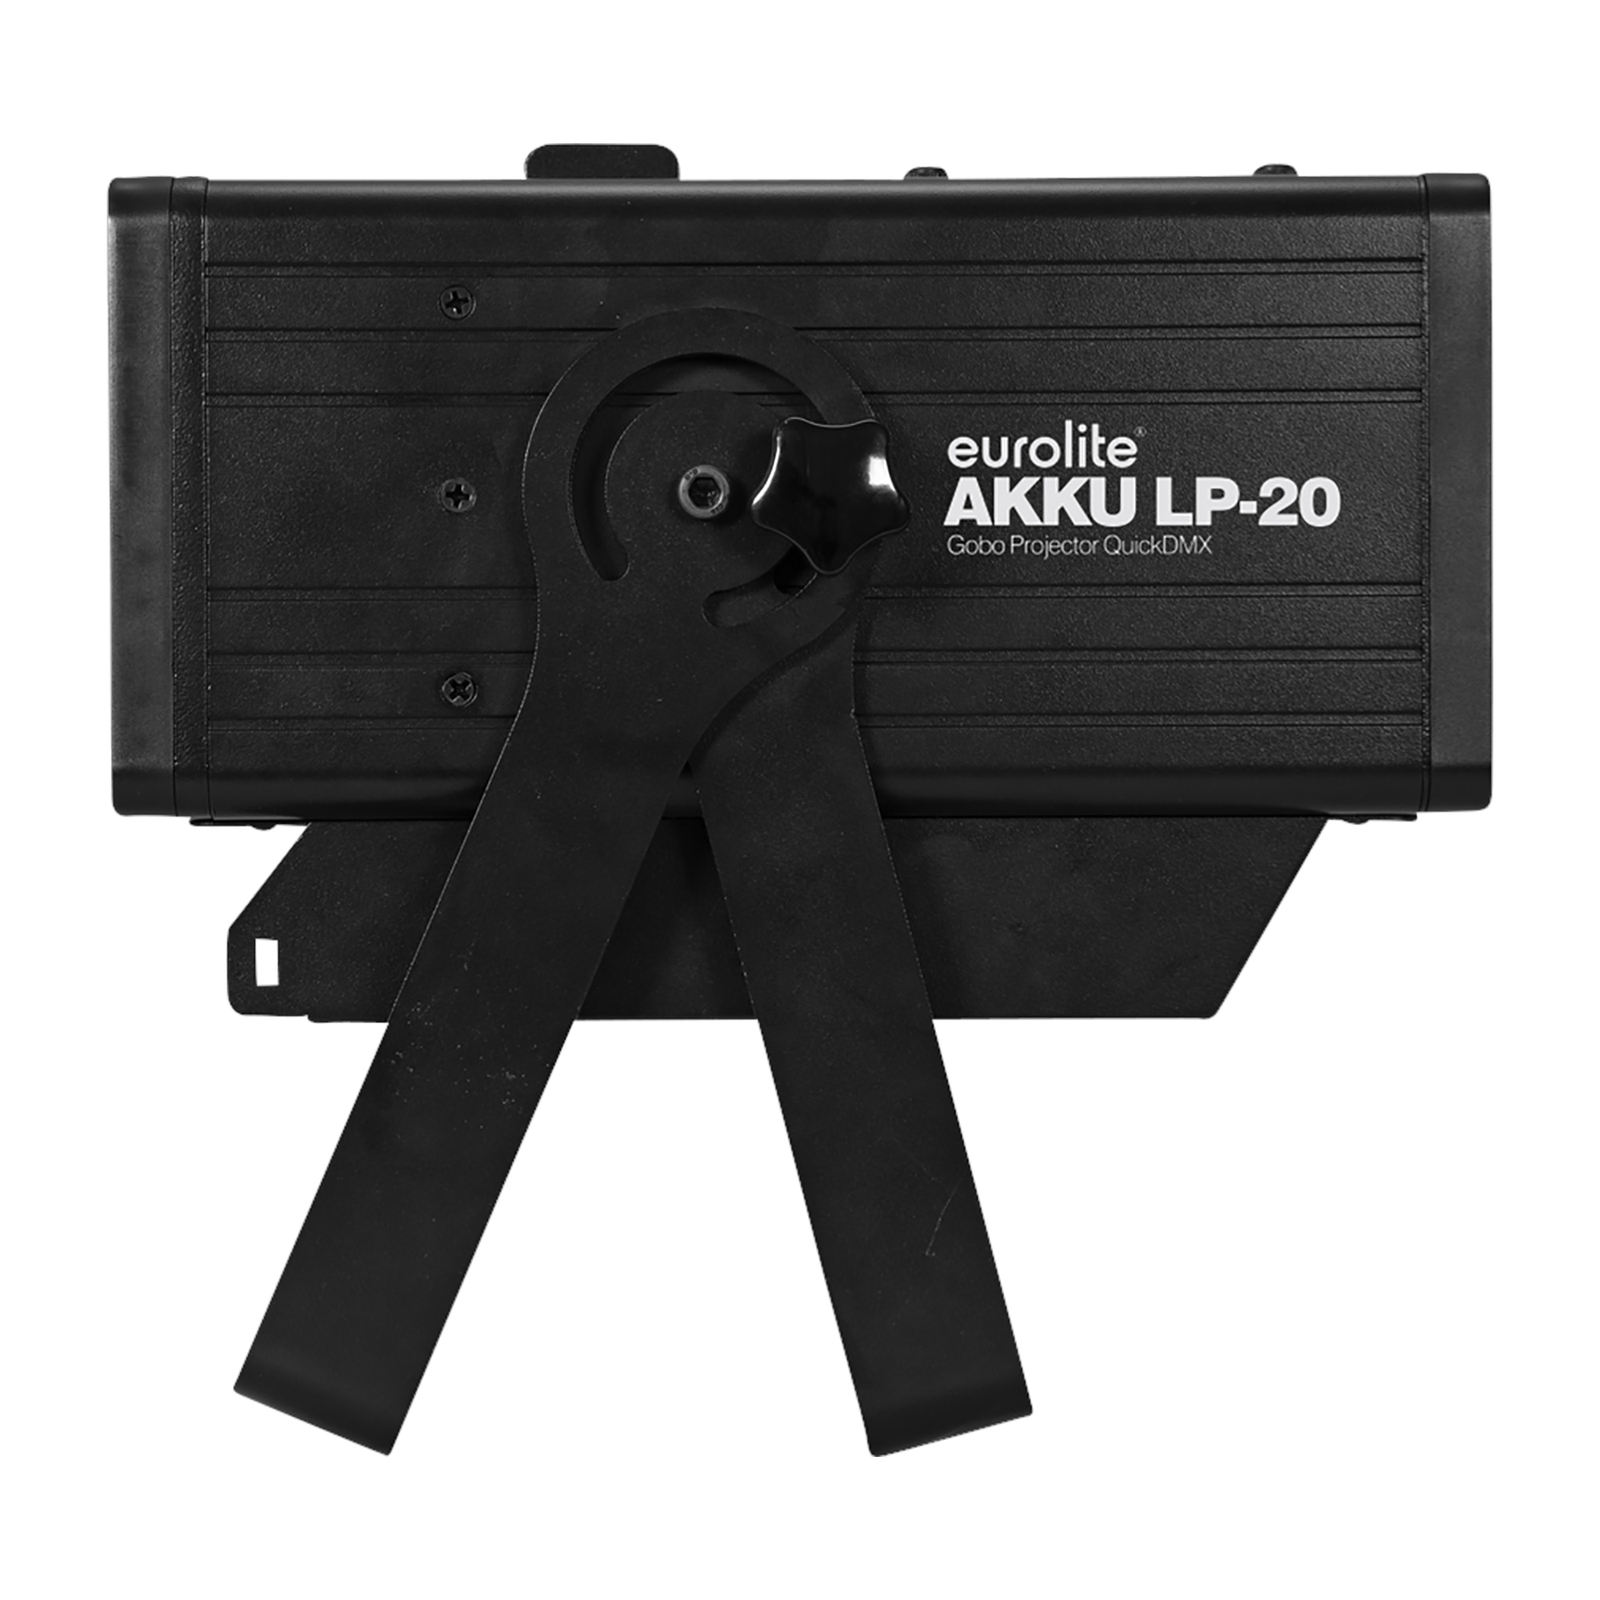 EUROLITE Akku LP-20 Gobo Projektor QuickDMX